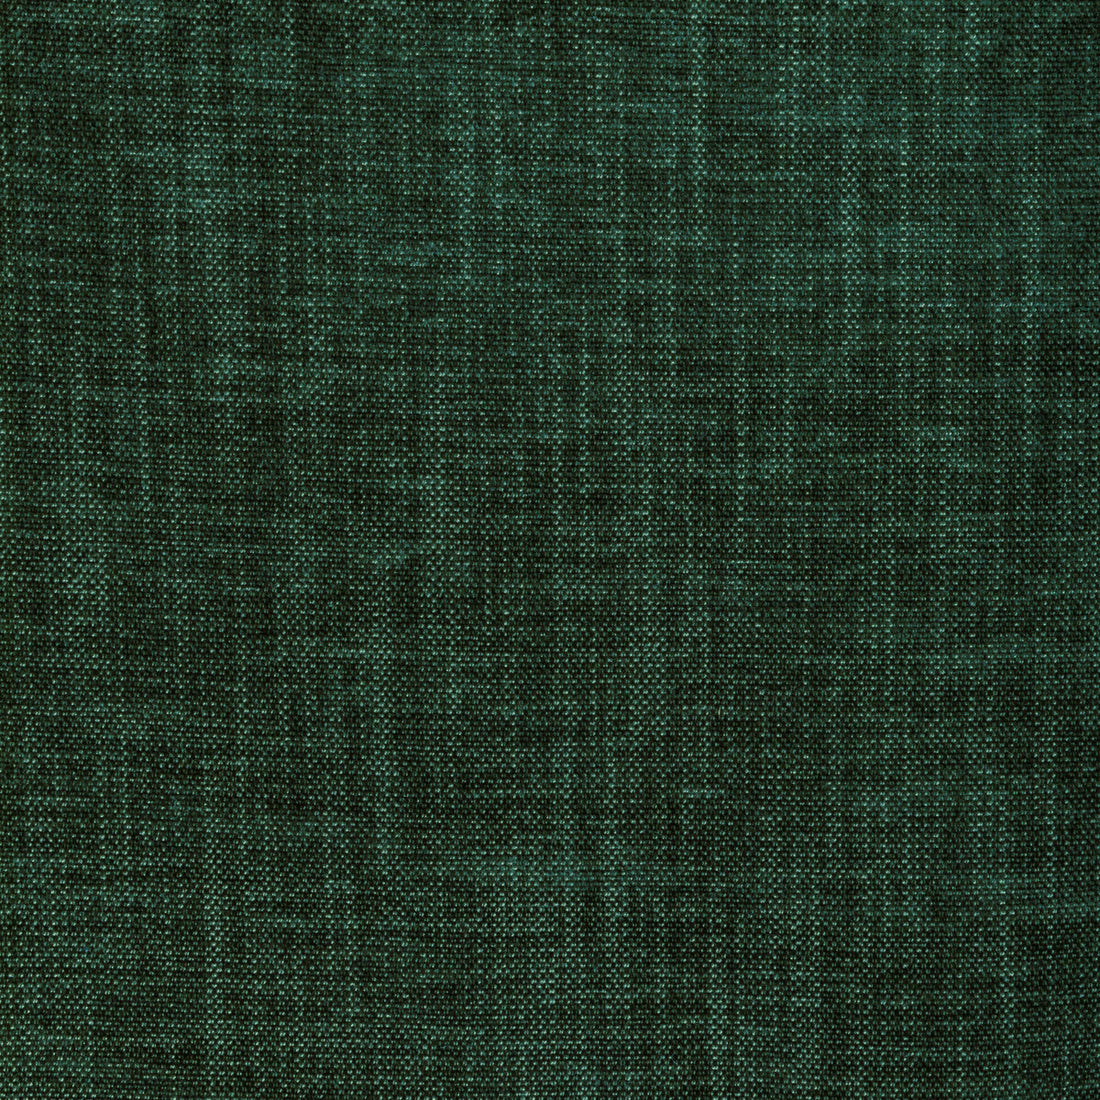 Kravet Smart fabric in 36650-330 color - pattern 36650.330.0 - by Kravet Smart in the Performance Kravetarmor collection